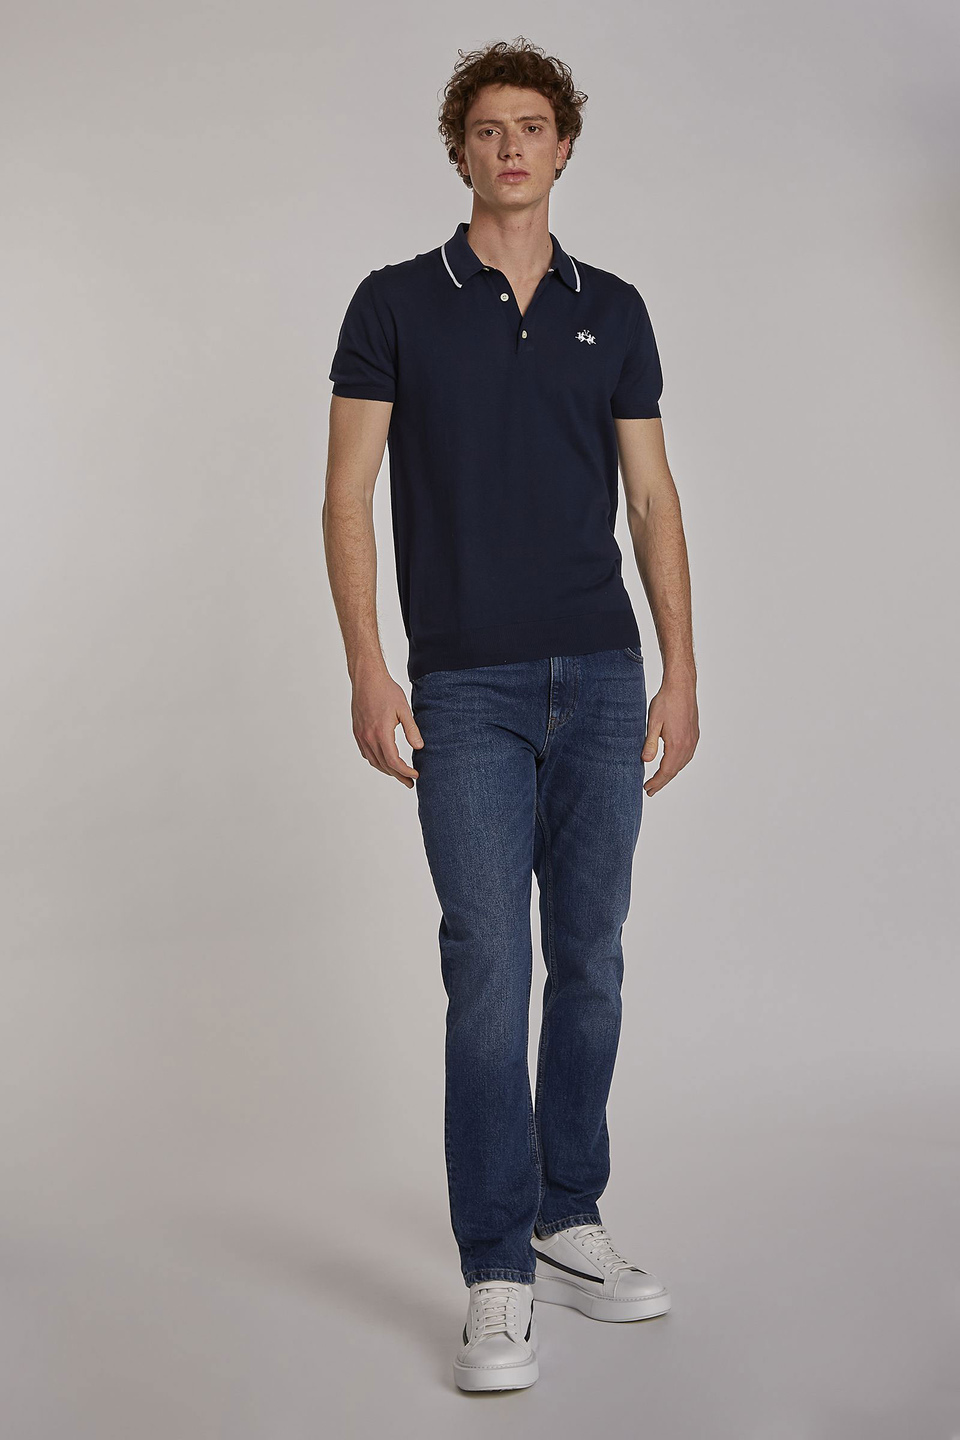 Herren-Poloshirt mit kurzen Ärmeln aus Baumwolle im Regular Fit | La Martina - Official Online Shop